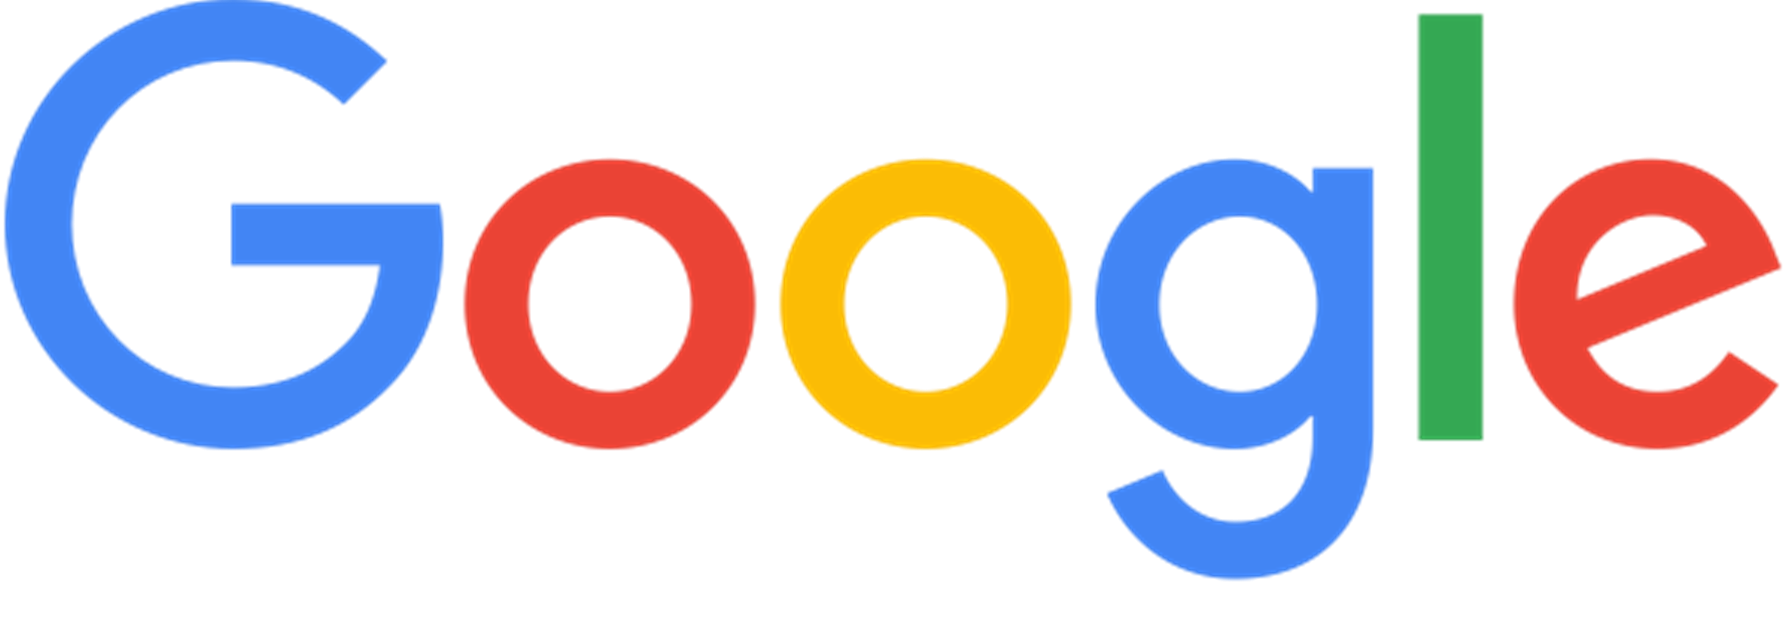 den nya Google-logotypen